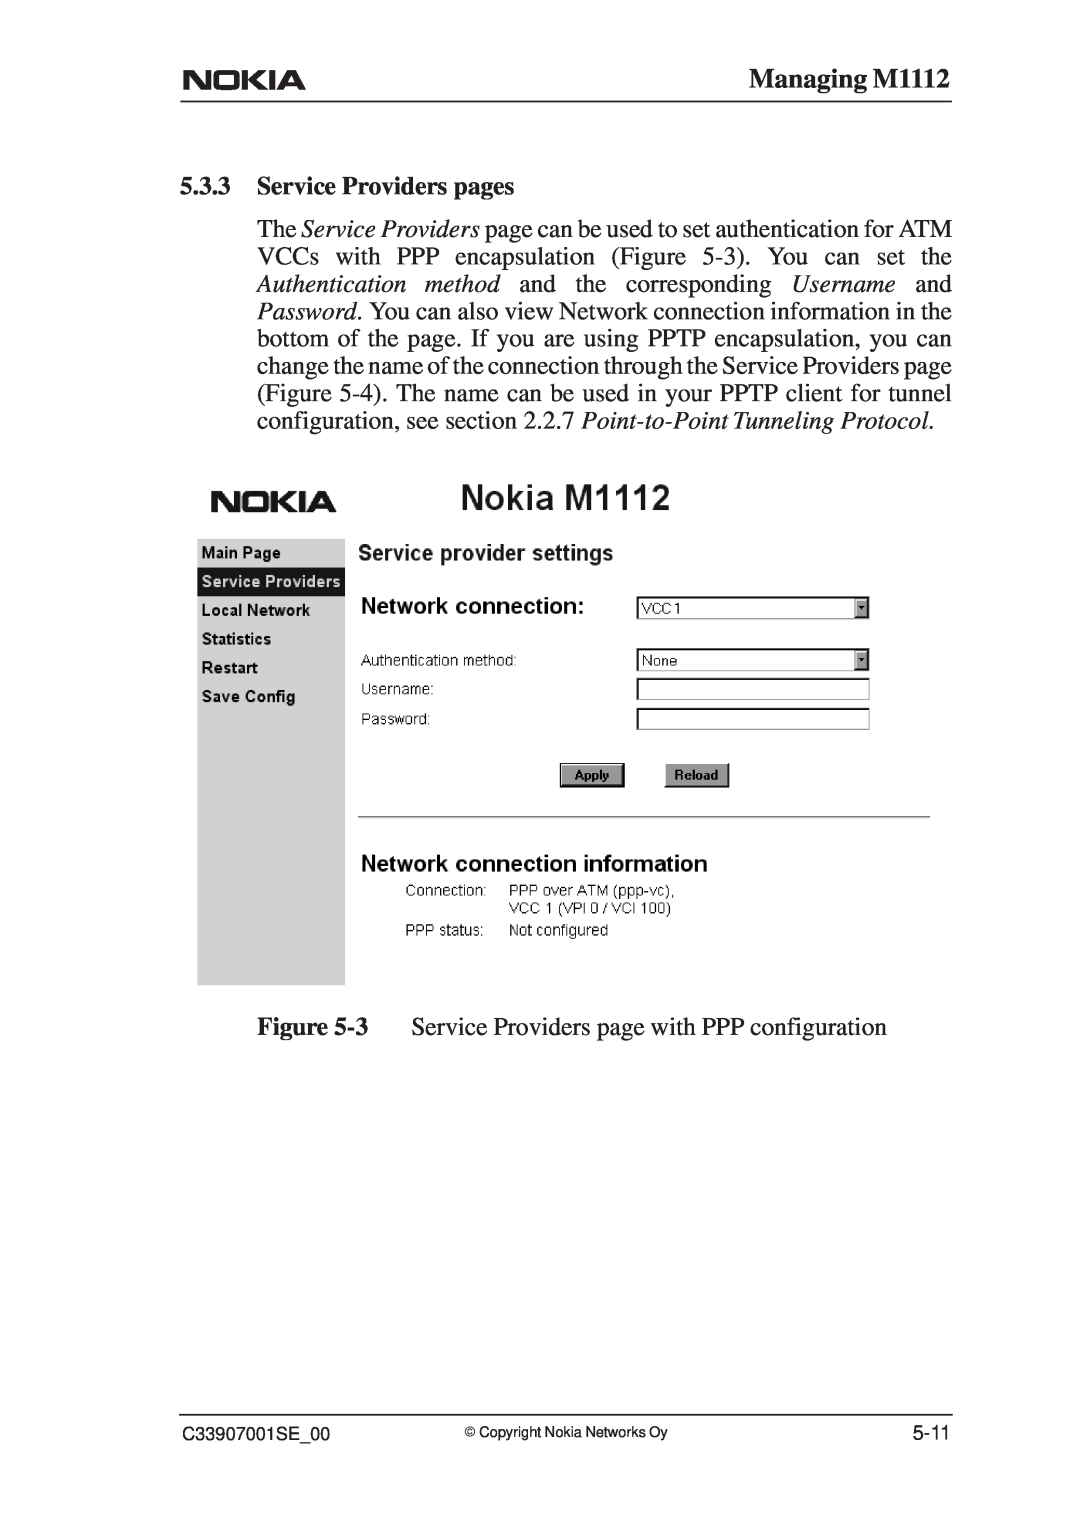 Nokia manual Managing M1112, Service Providers pages, 3 Service Providers page with PPP configuration 